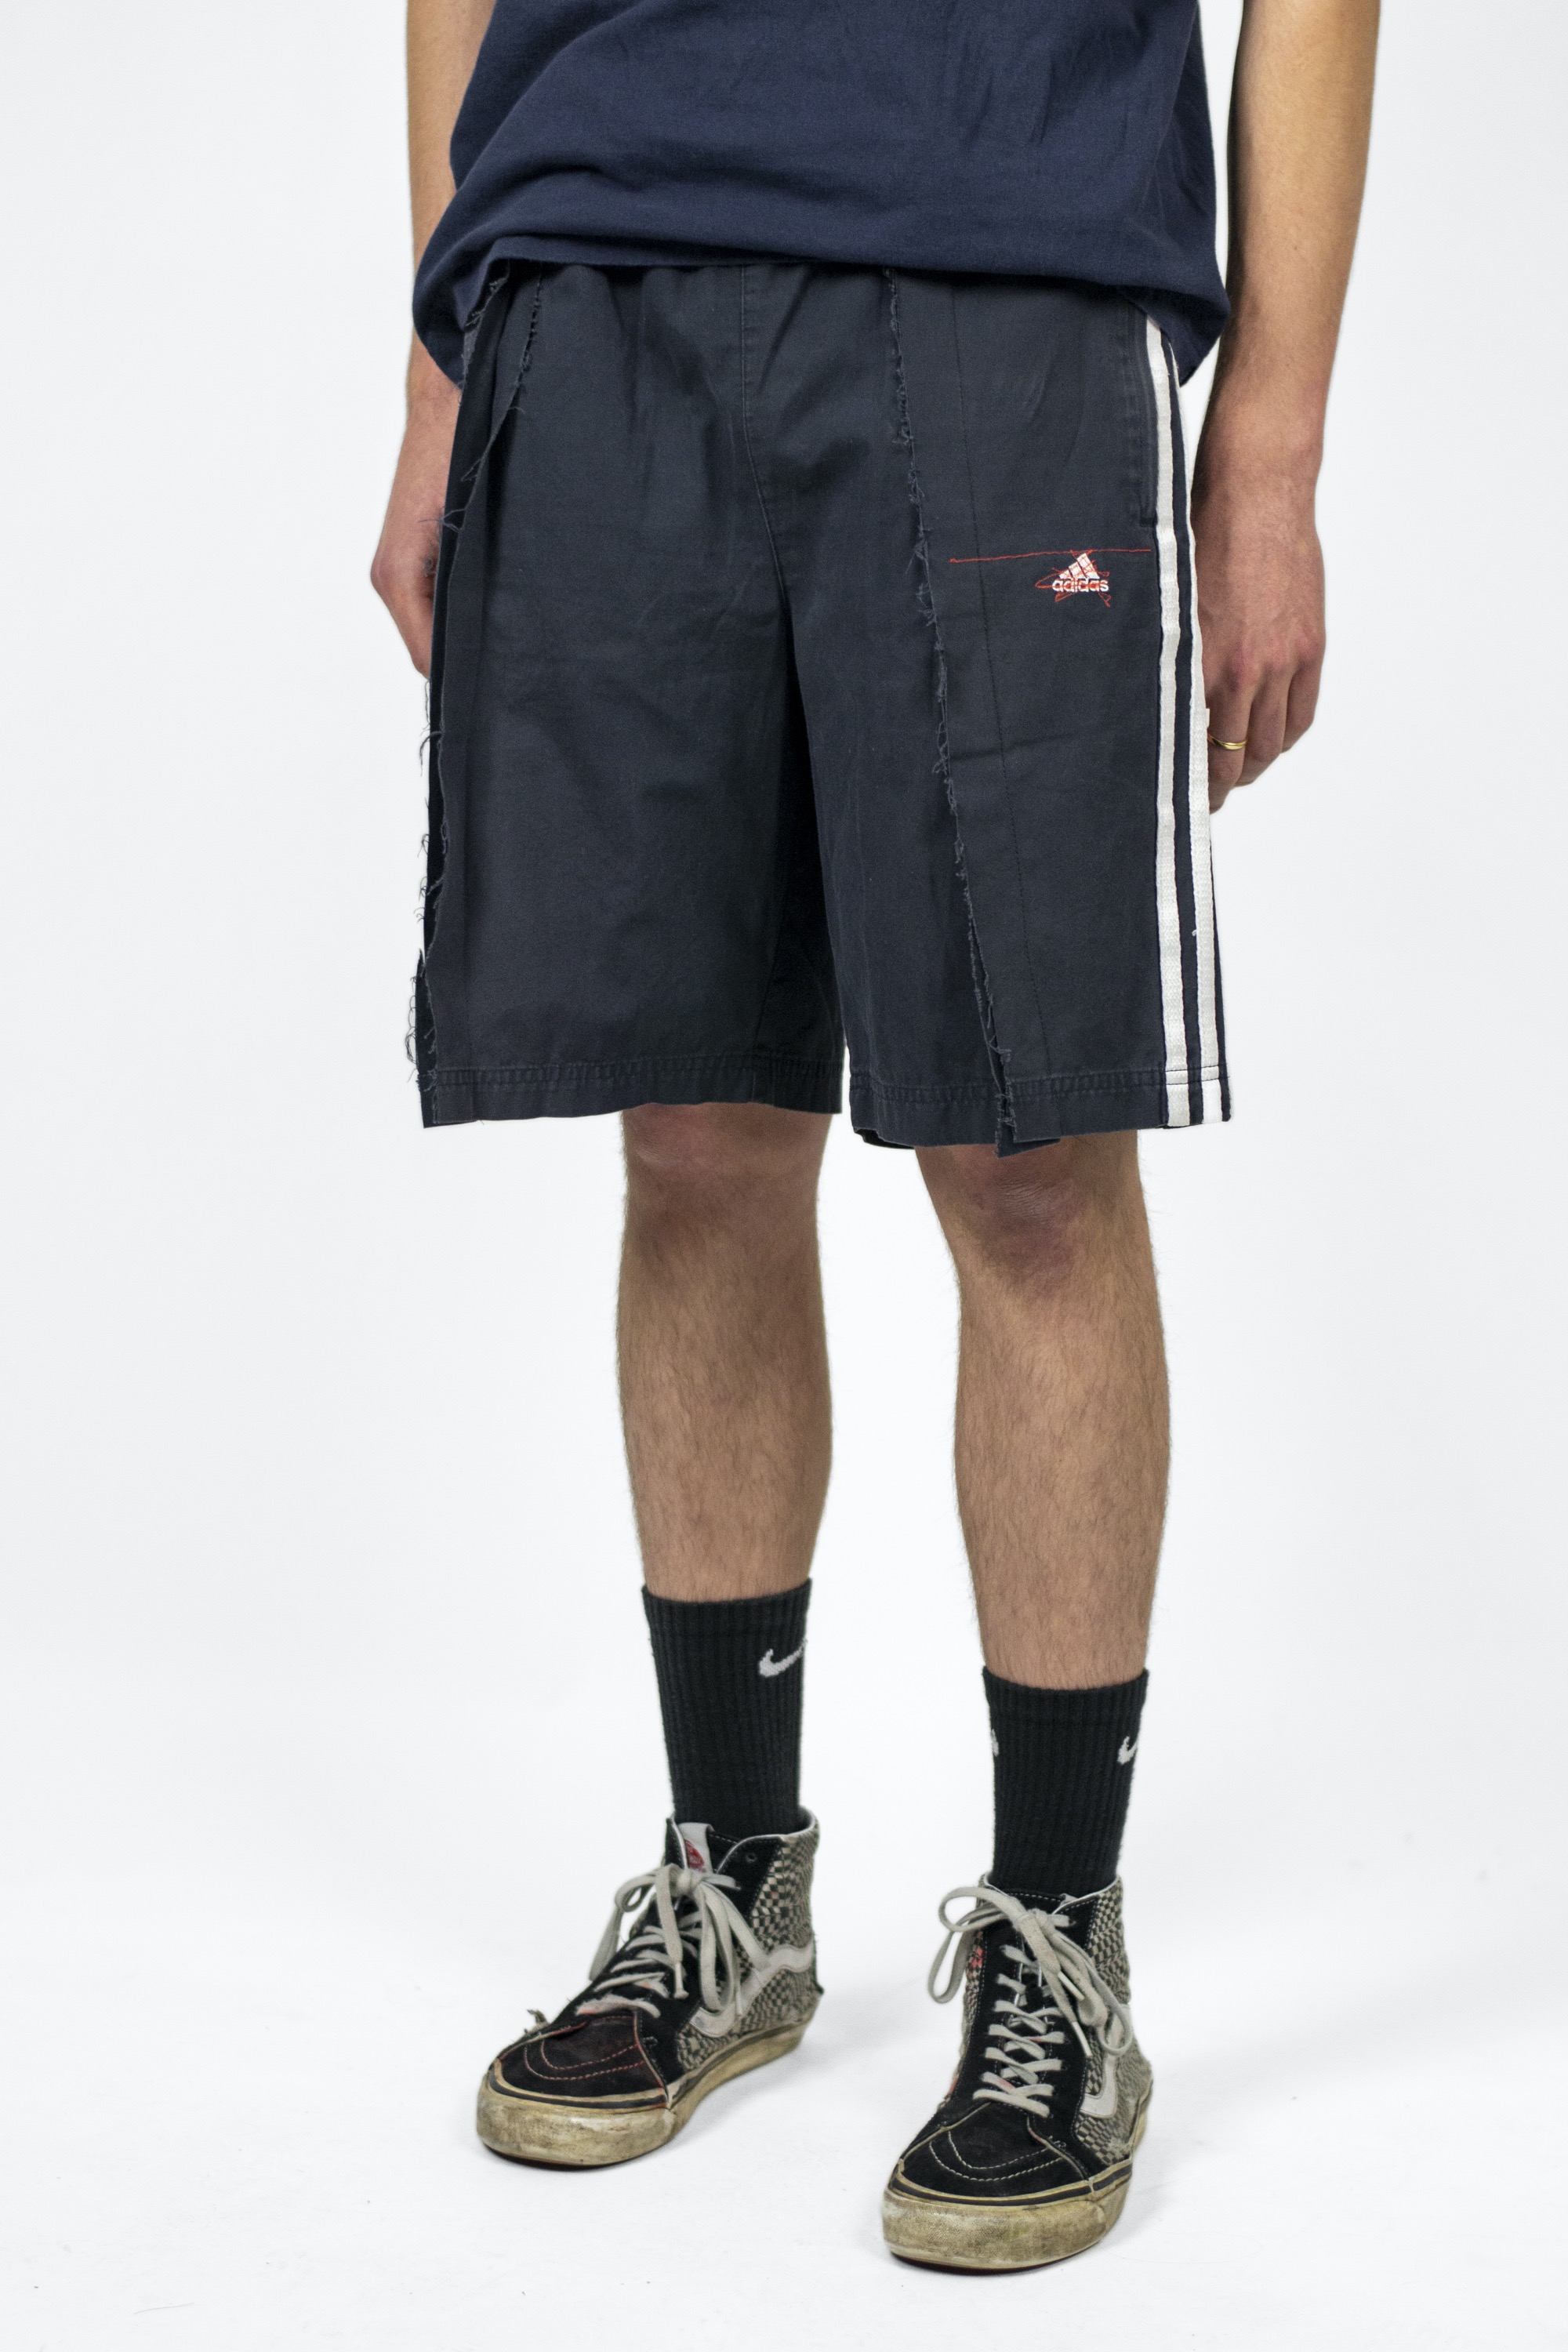 A model wearing fixed shorts